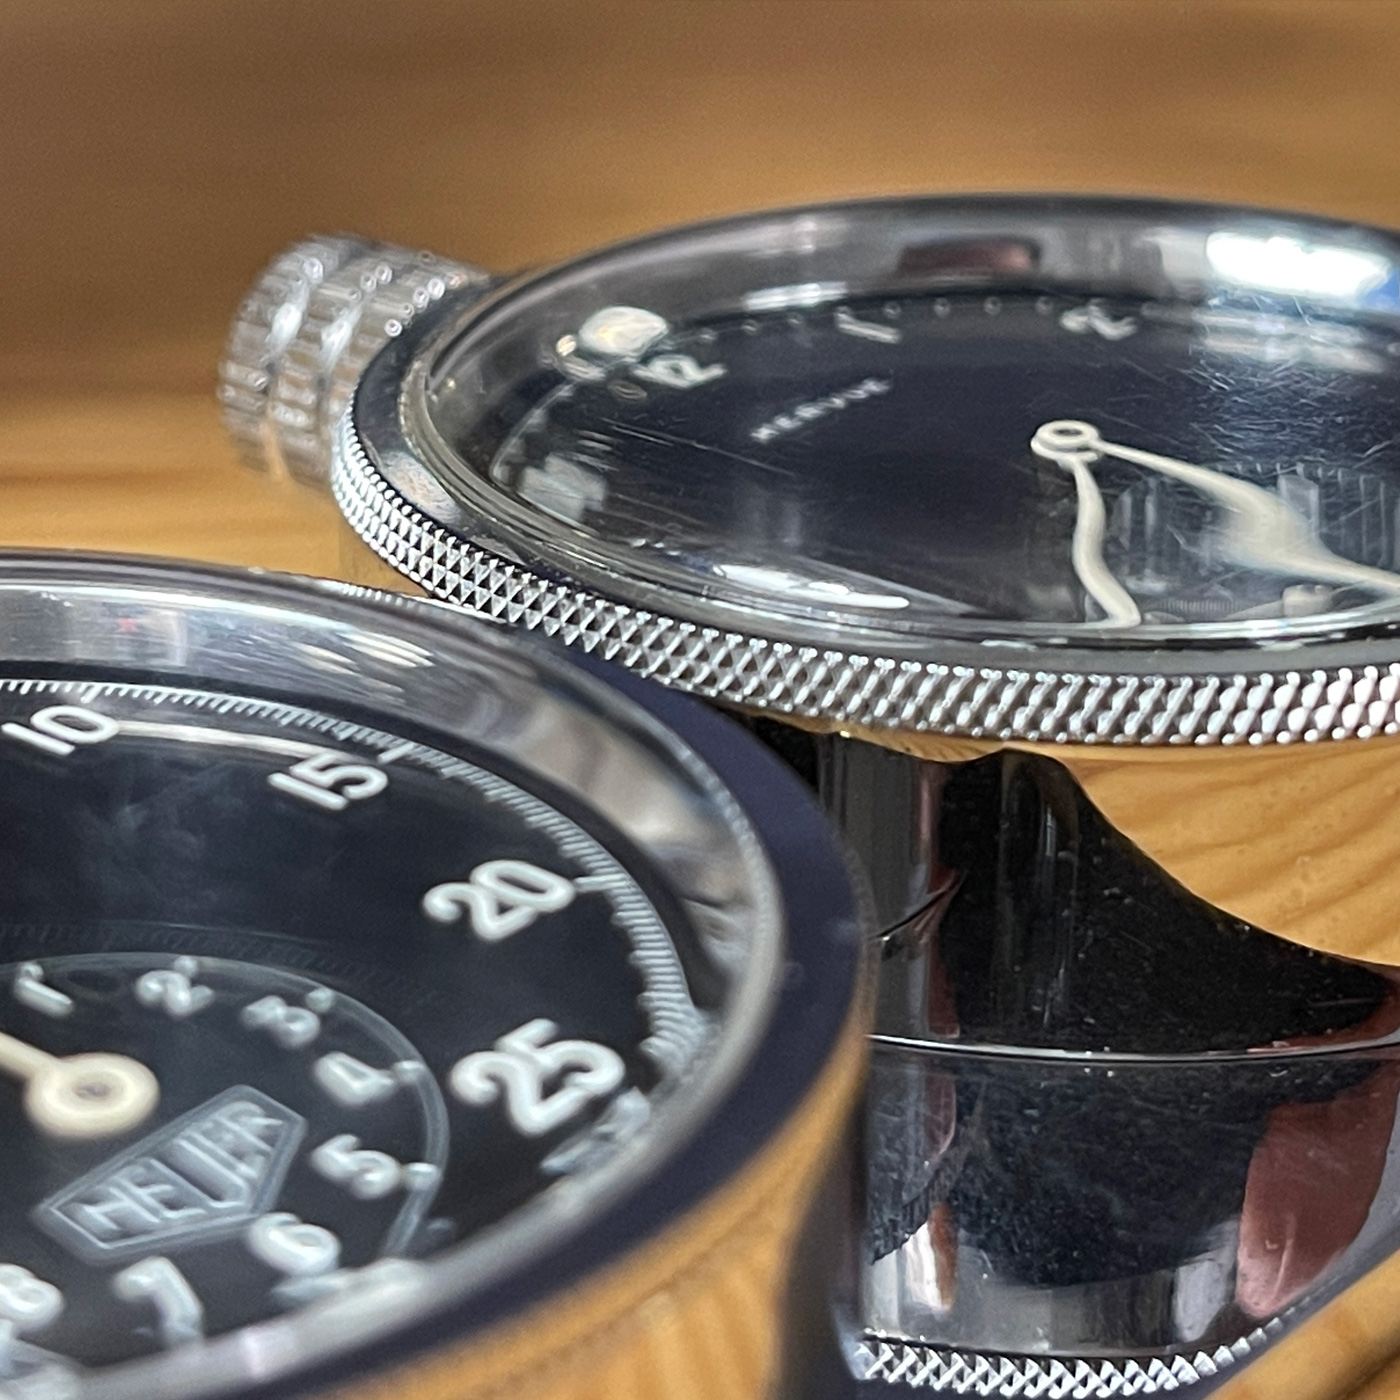 Vintage Heuer HERVUE clock and AUTAVIA stopwatch set #1